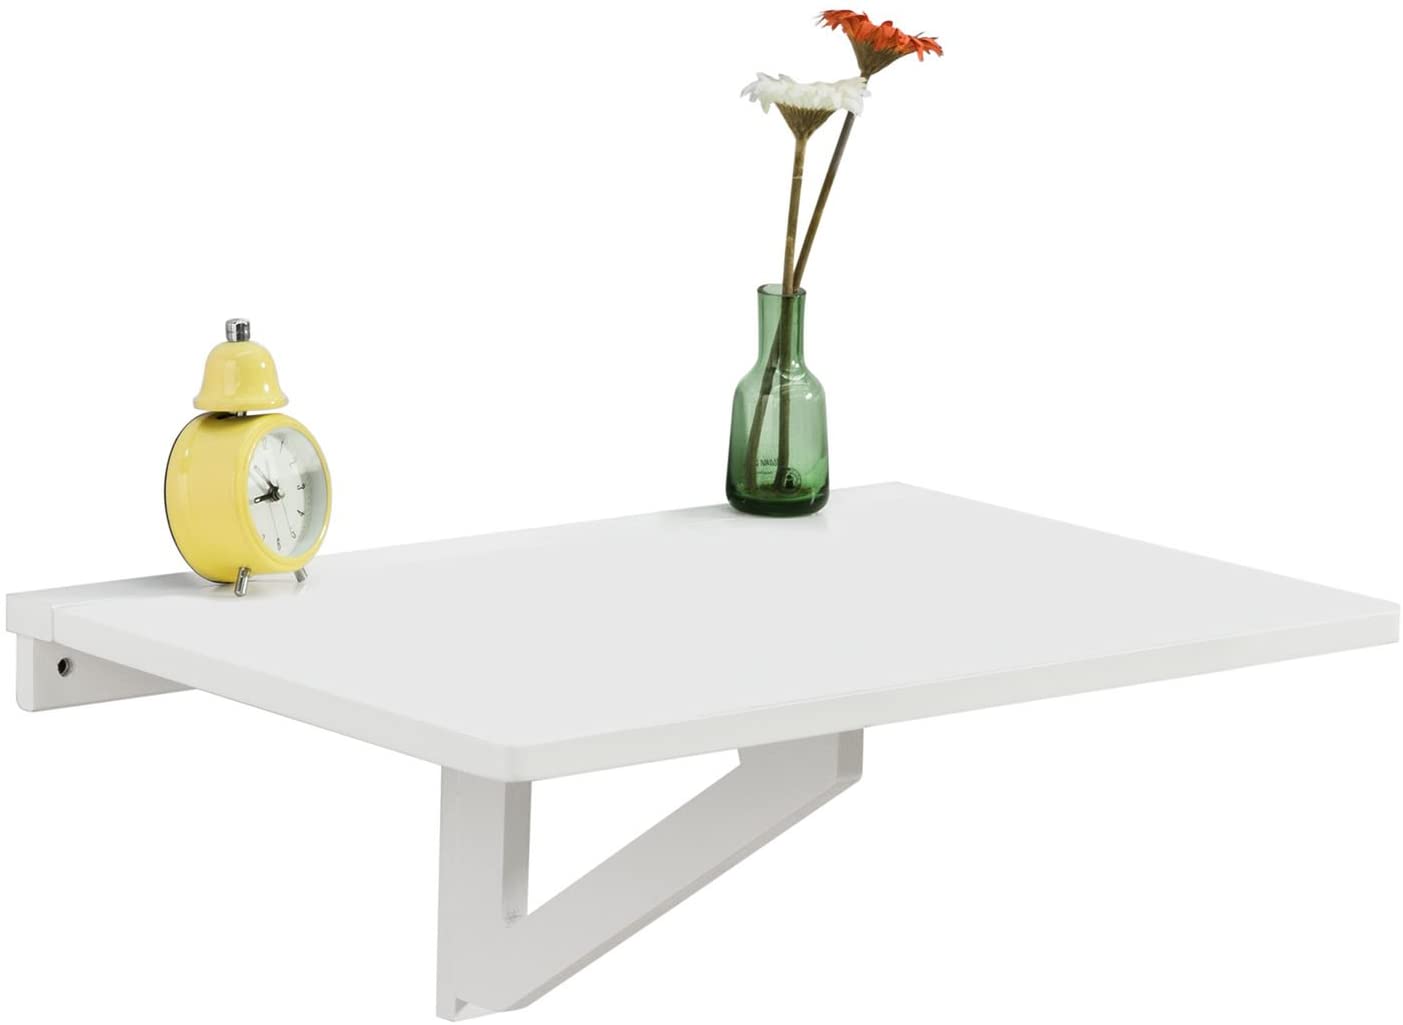 Korean Folded Table - X10 Maroc - Livraison gratuite -